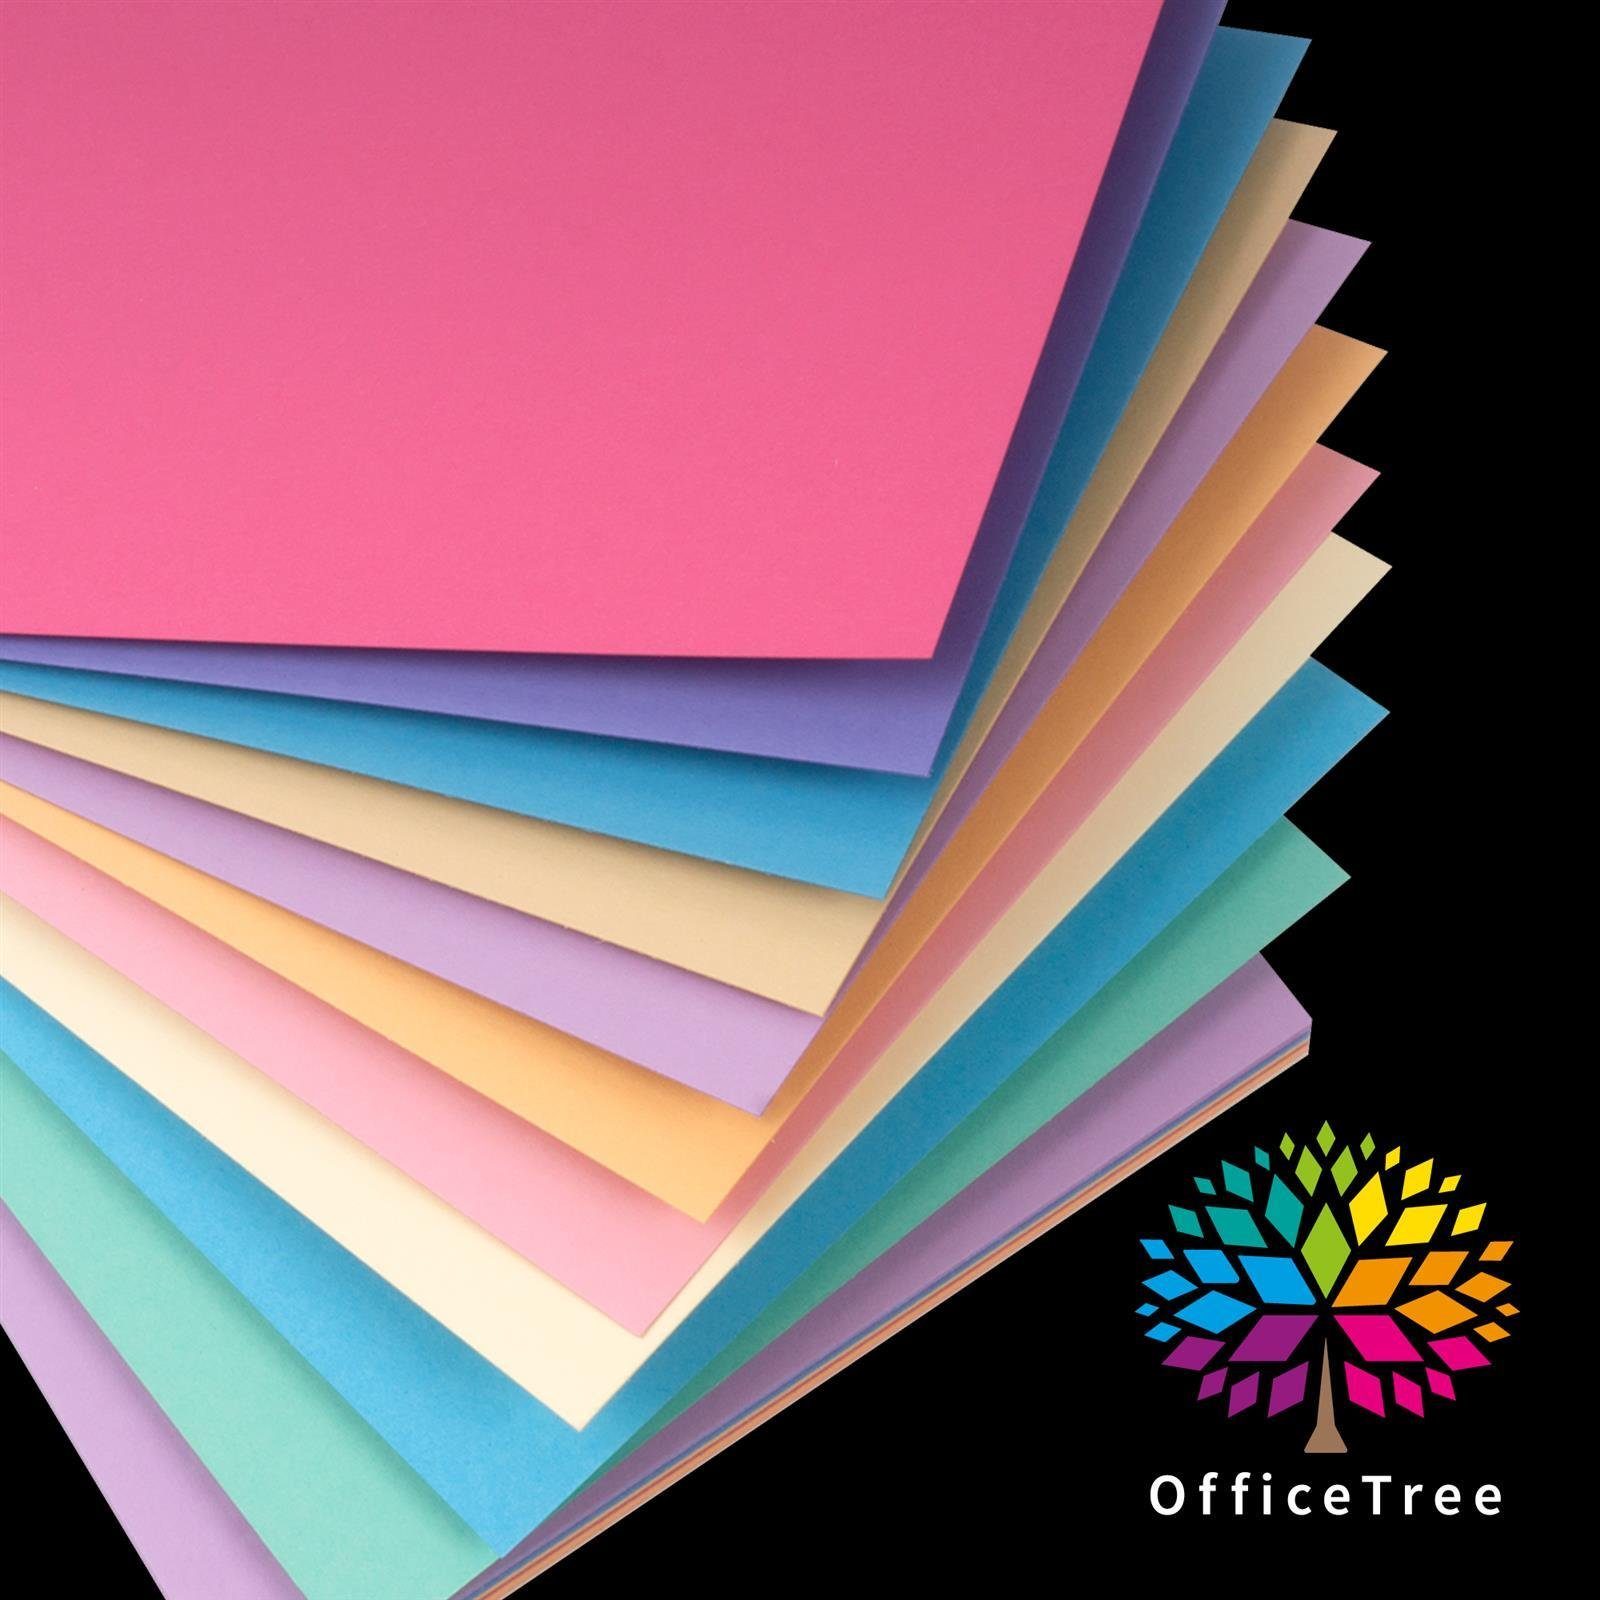 Gestalten Pastell und Tonpapier 50 OfficeTree Transparentpapier 300g/m² Bastelset zum Kinder OfficeTree Töne - -, Bastelpapier Basteln Blatt A4